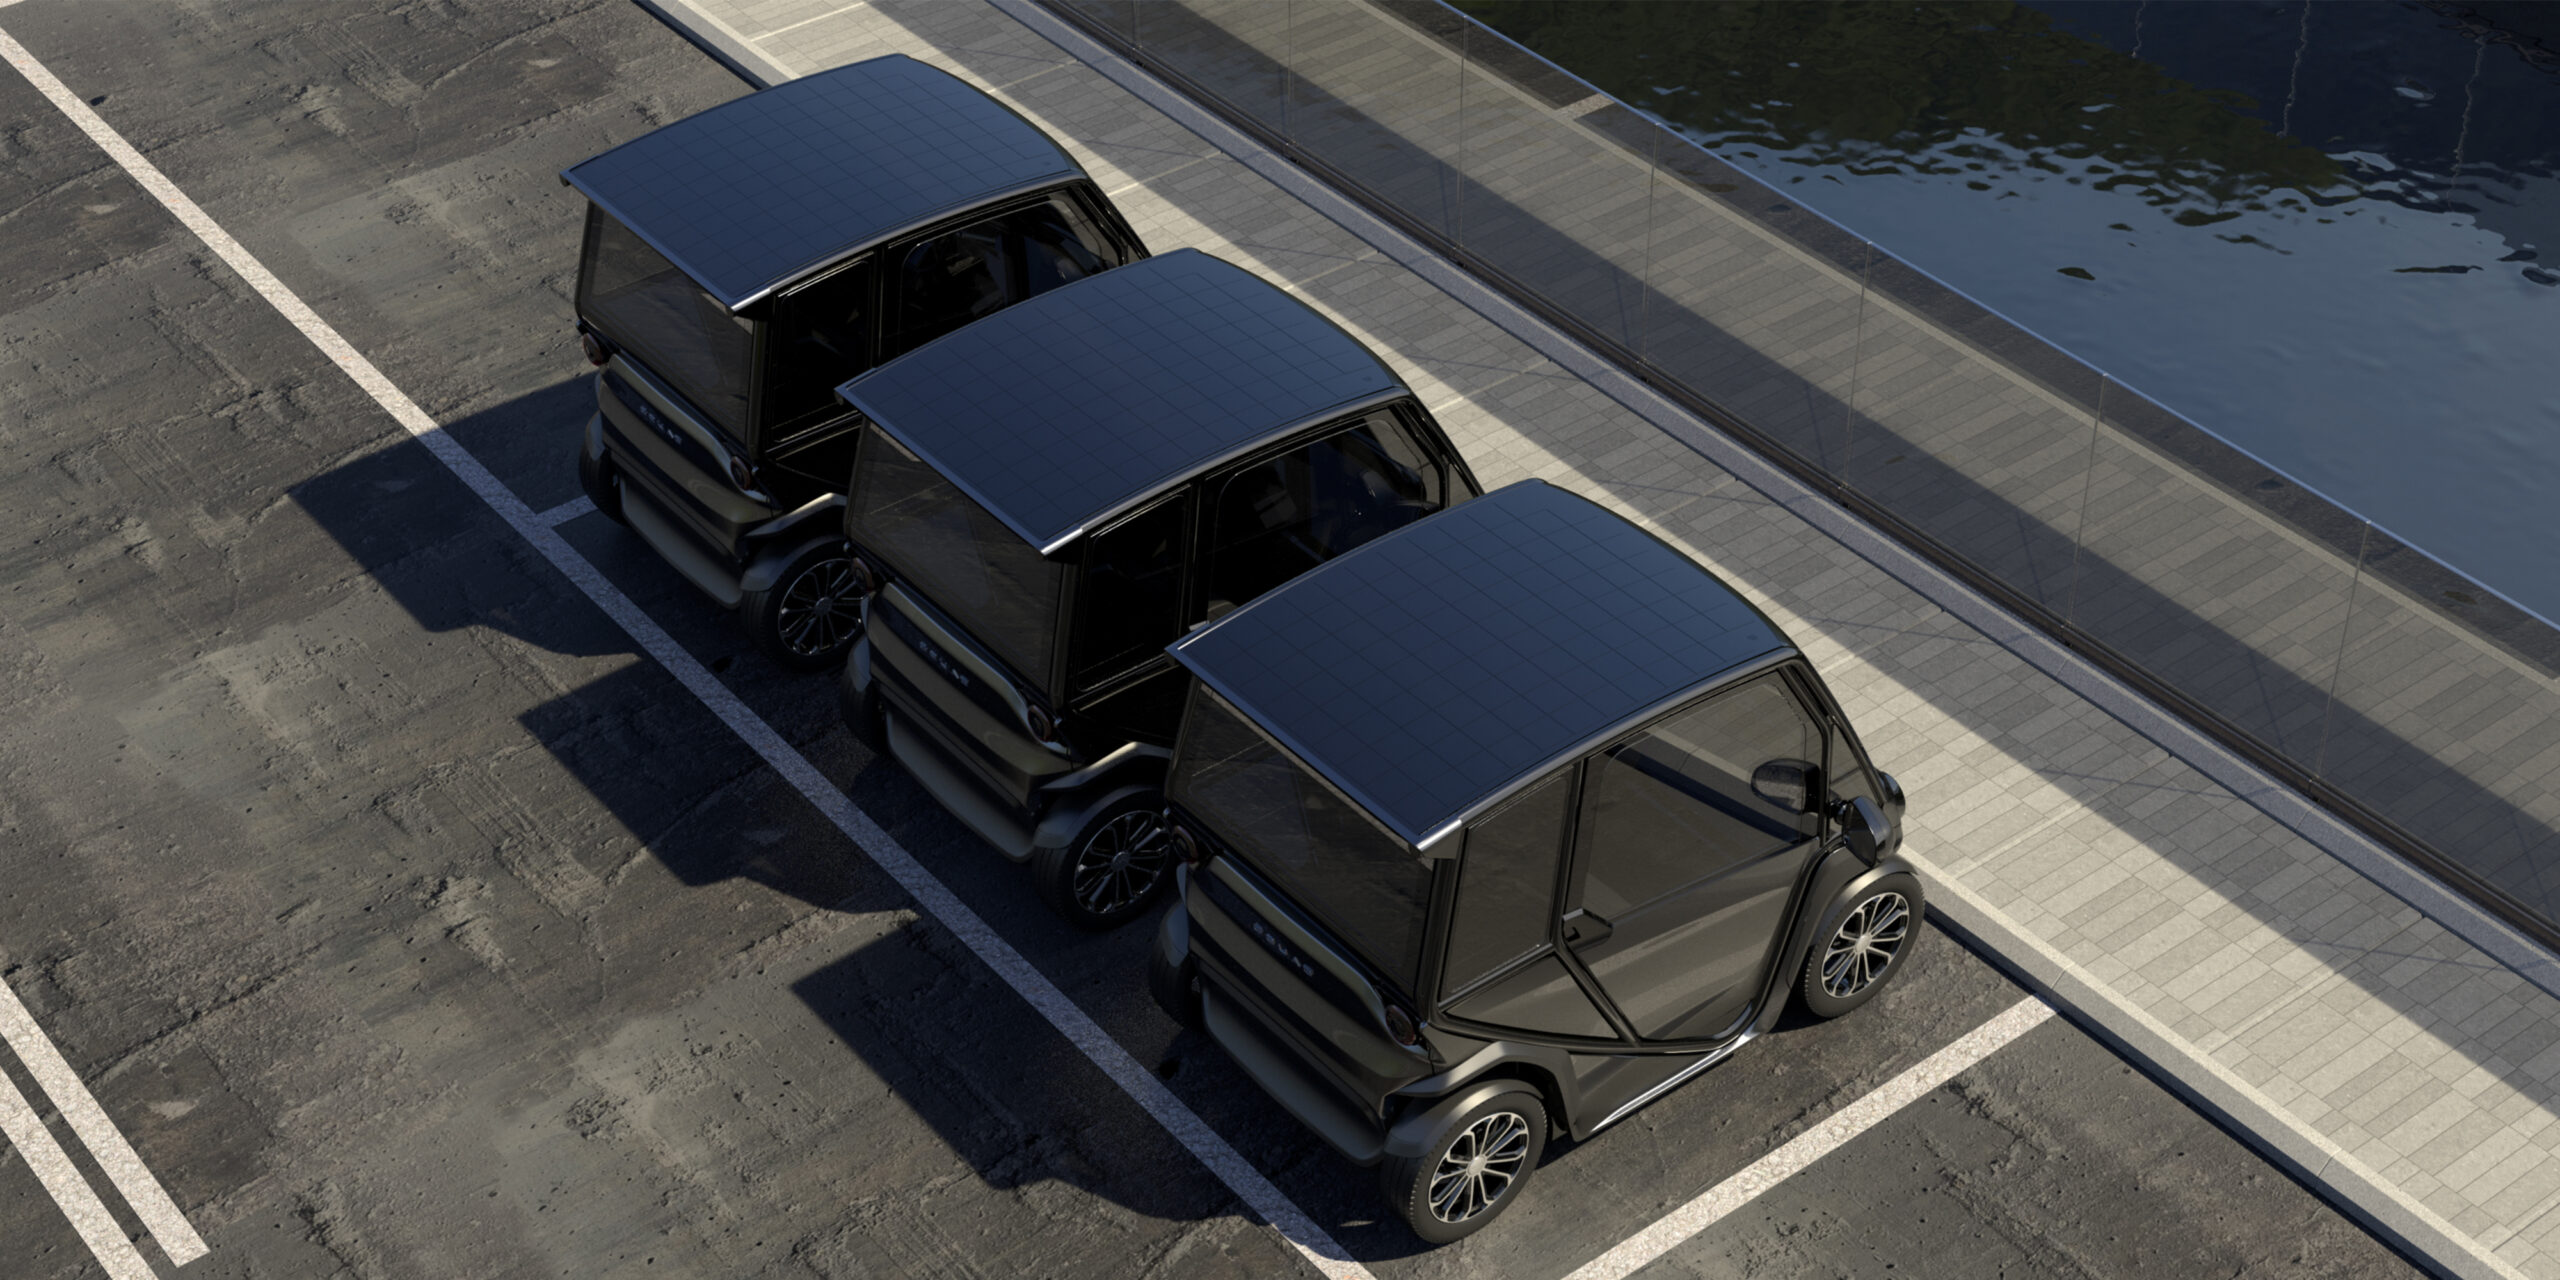 Squad Solar City Car for Sharing 300ppi